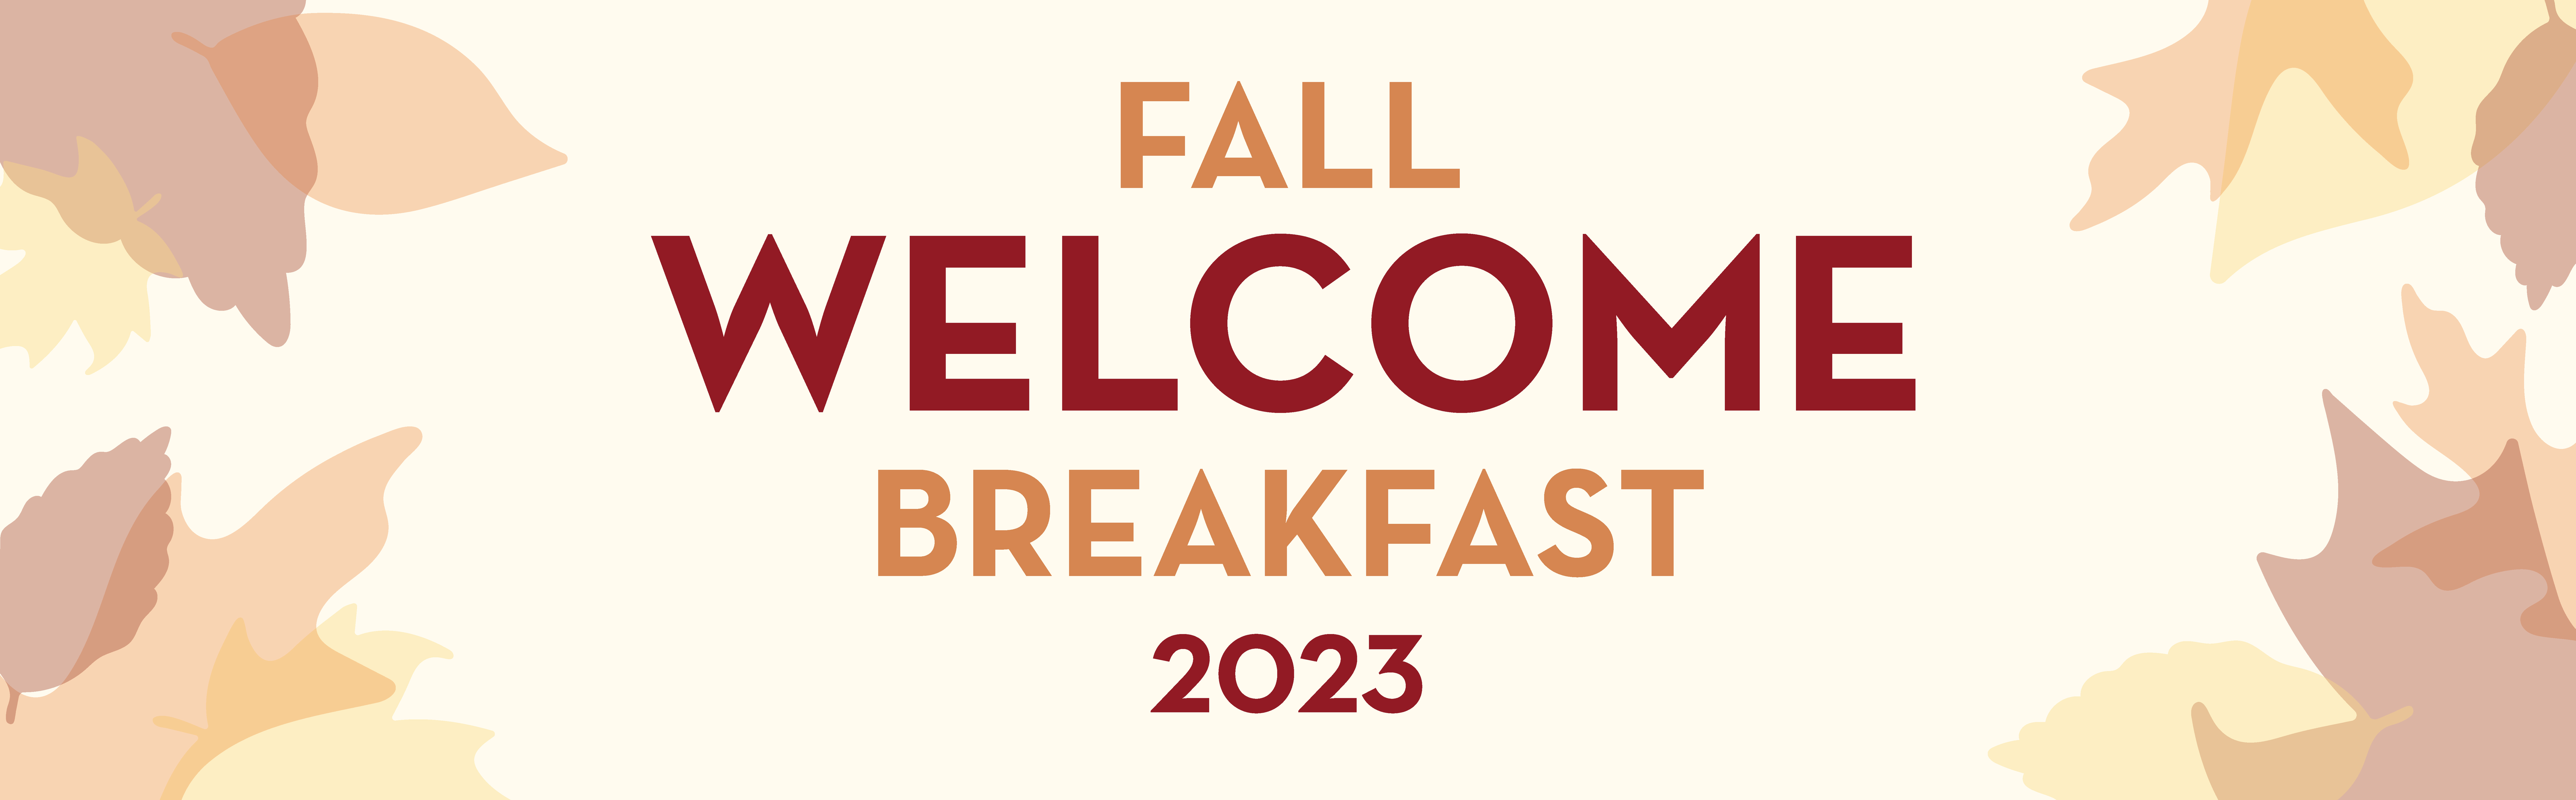 Fall Welcome Breakfast 2023